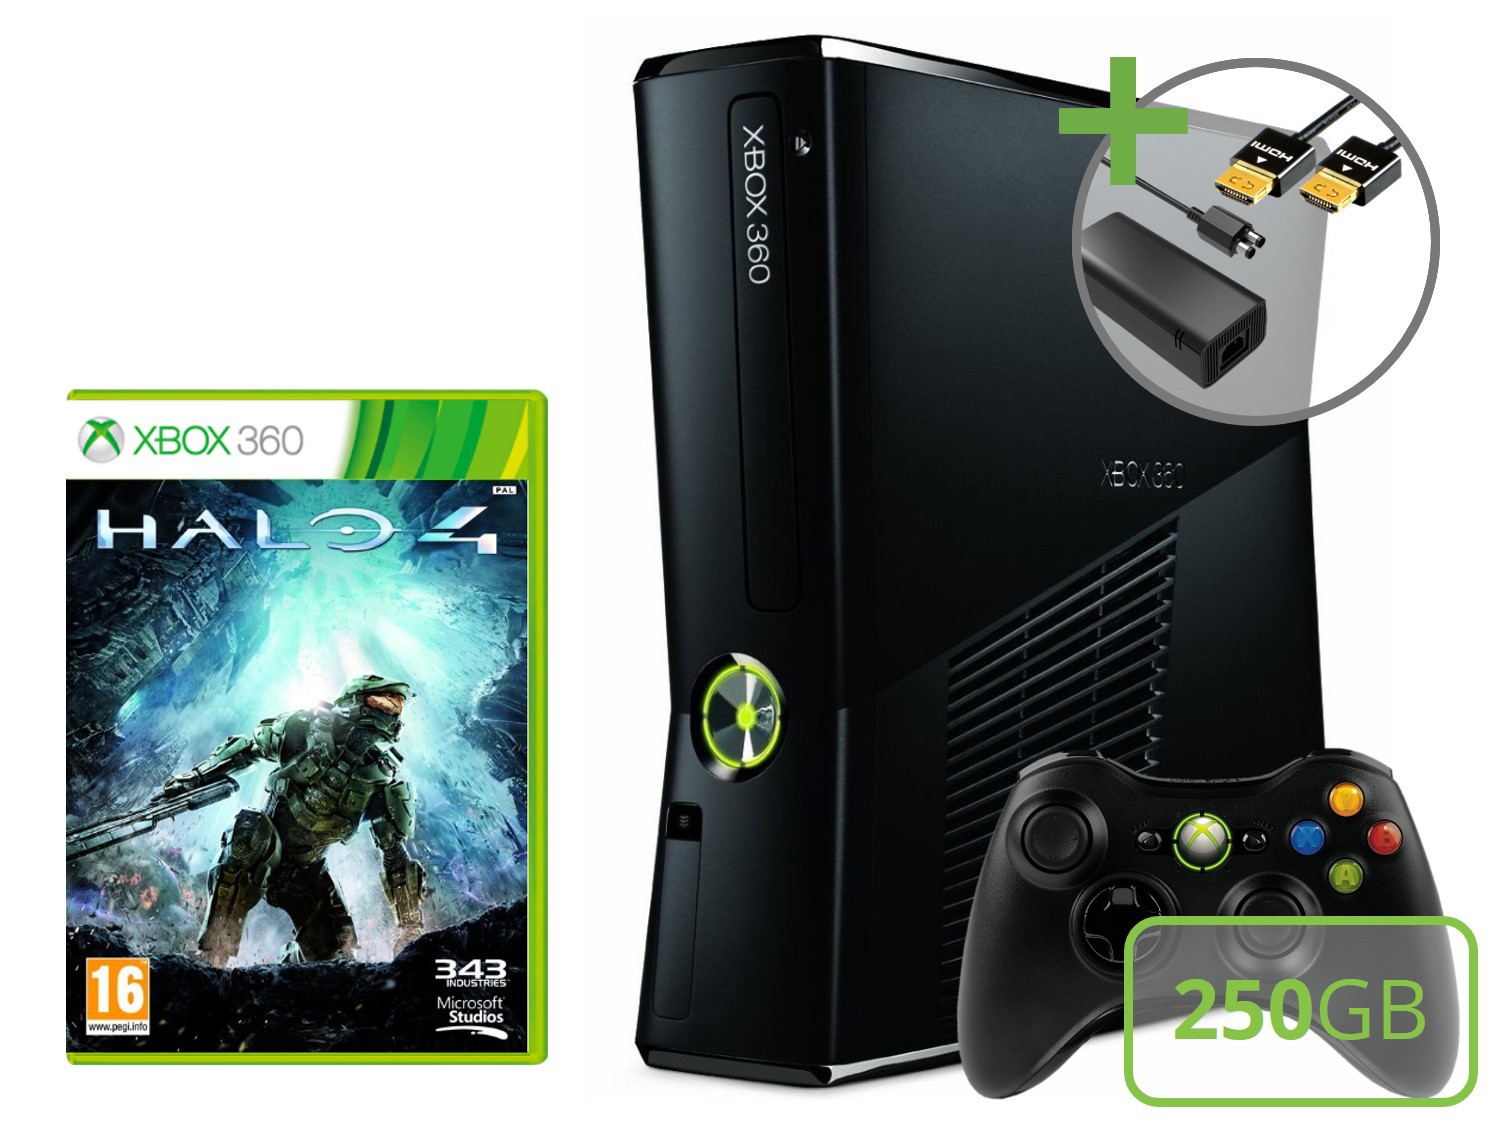 Microsoft Xbox 360 Slim Starter Pack - Halo 4 Edition - Xbox 360 Hardware